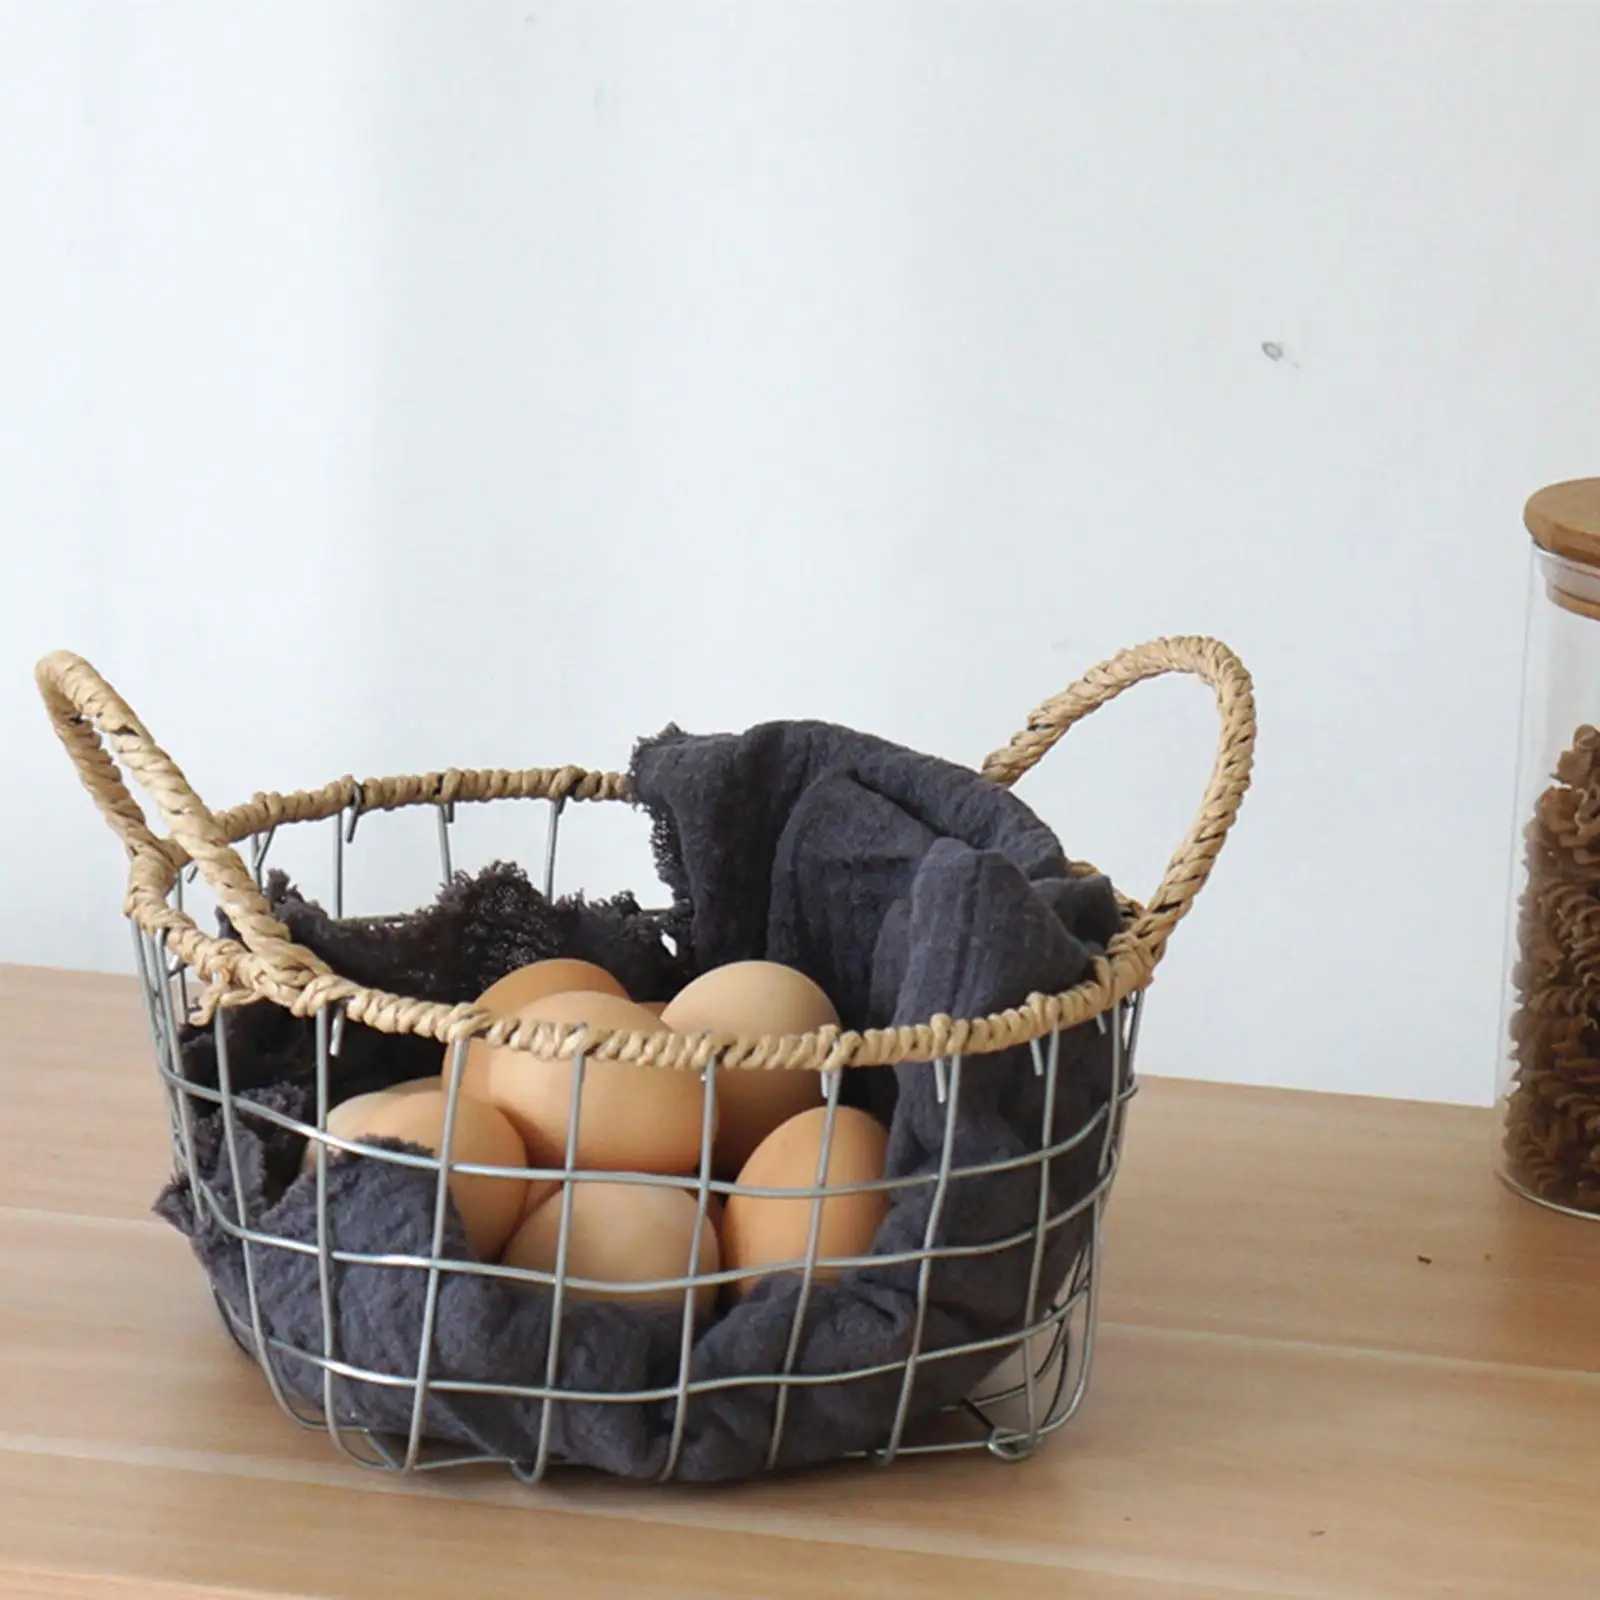 Egg Basket Serving Bowl Fruit Stand Portable Fruit and Vegetable Basket for Pantry Farmhouse Cabinet Kitchen Counter Dining Room